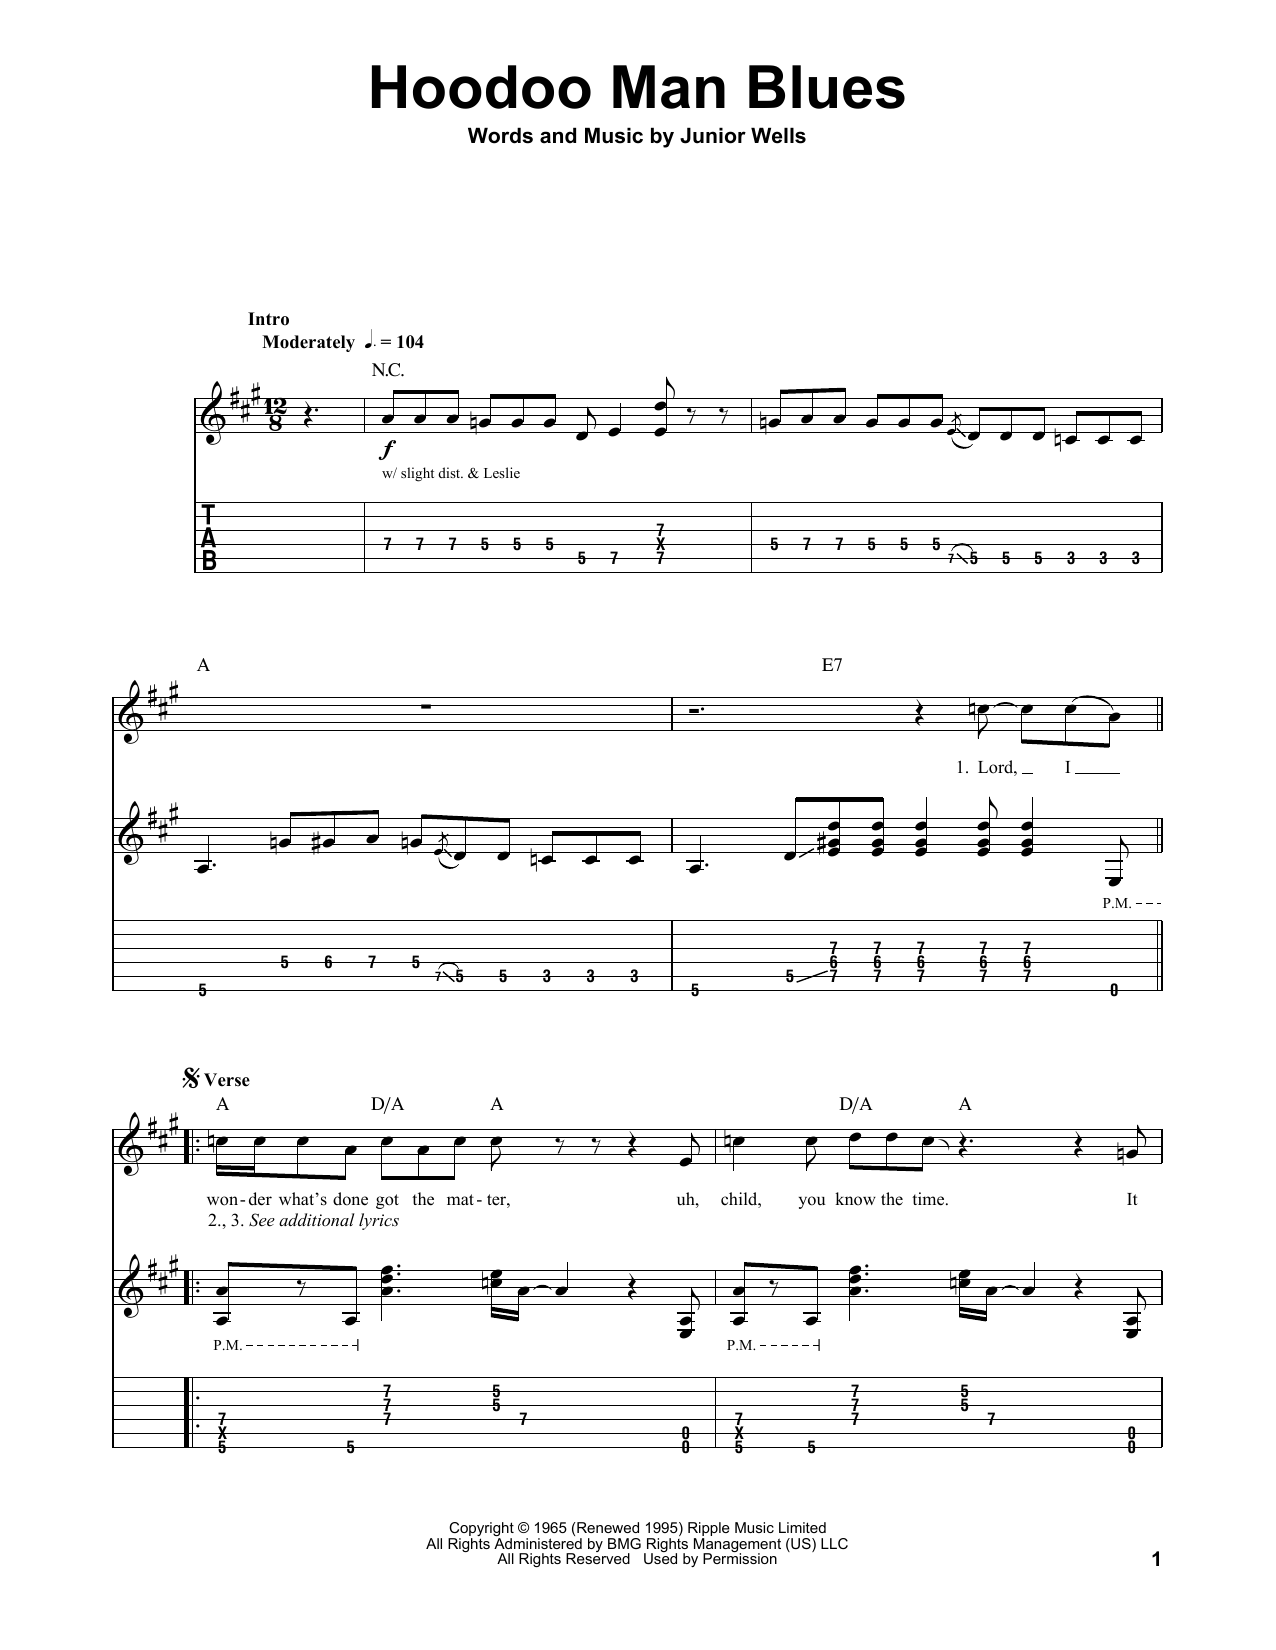 Buddy Guy Hoodoo Man Blues Sheet Music Notes & Chords for Guitar Tab Play-Along - Download or Print PDF